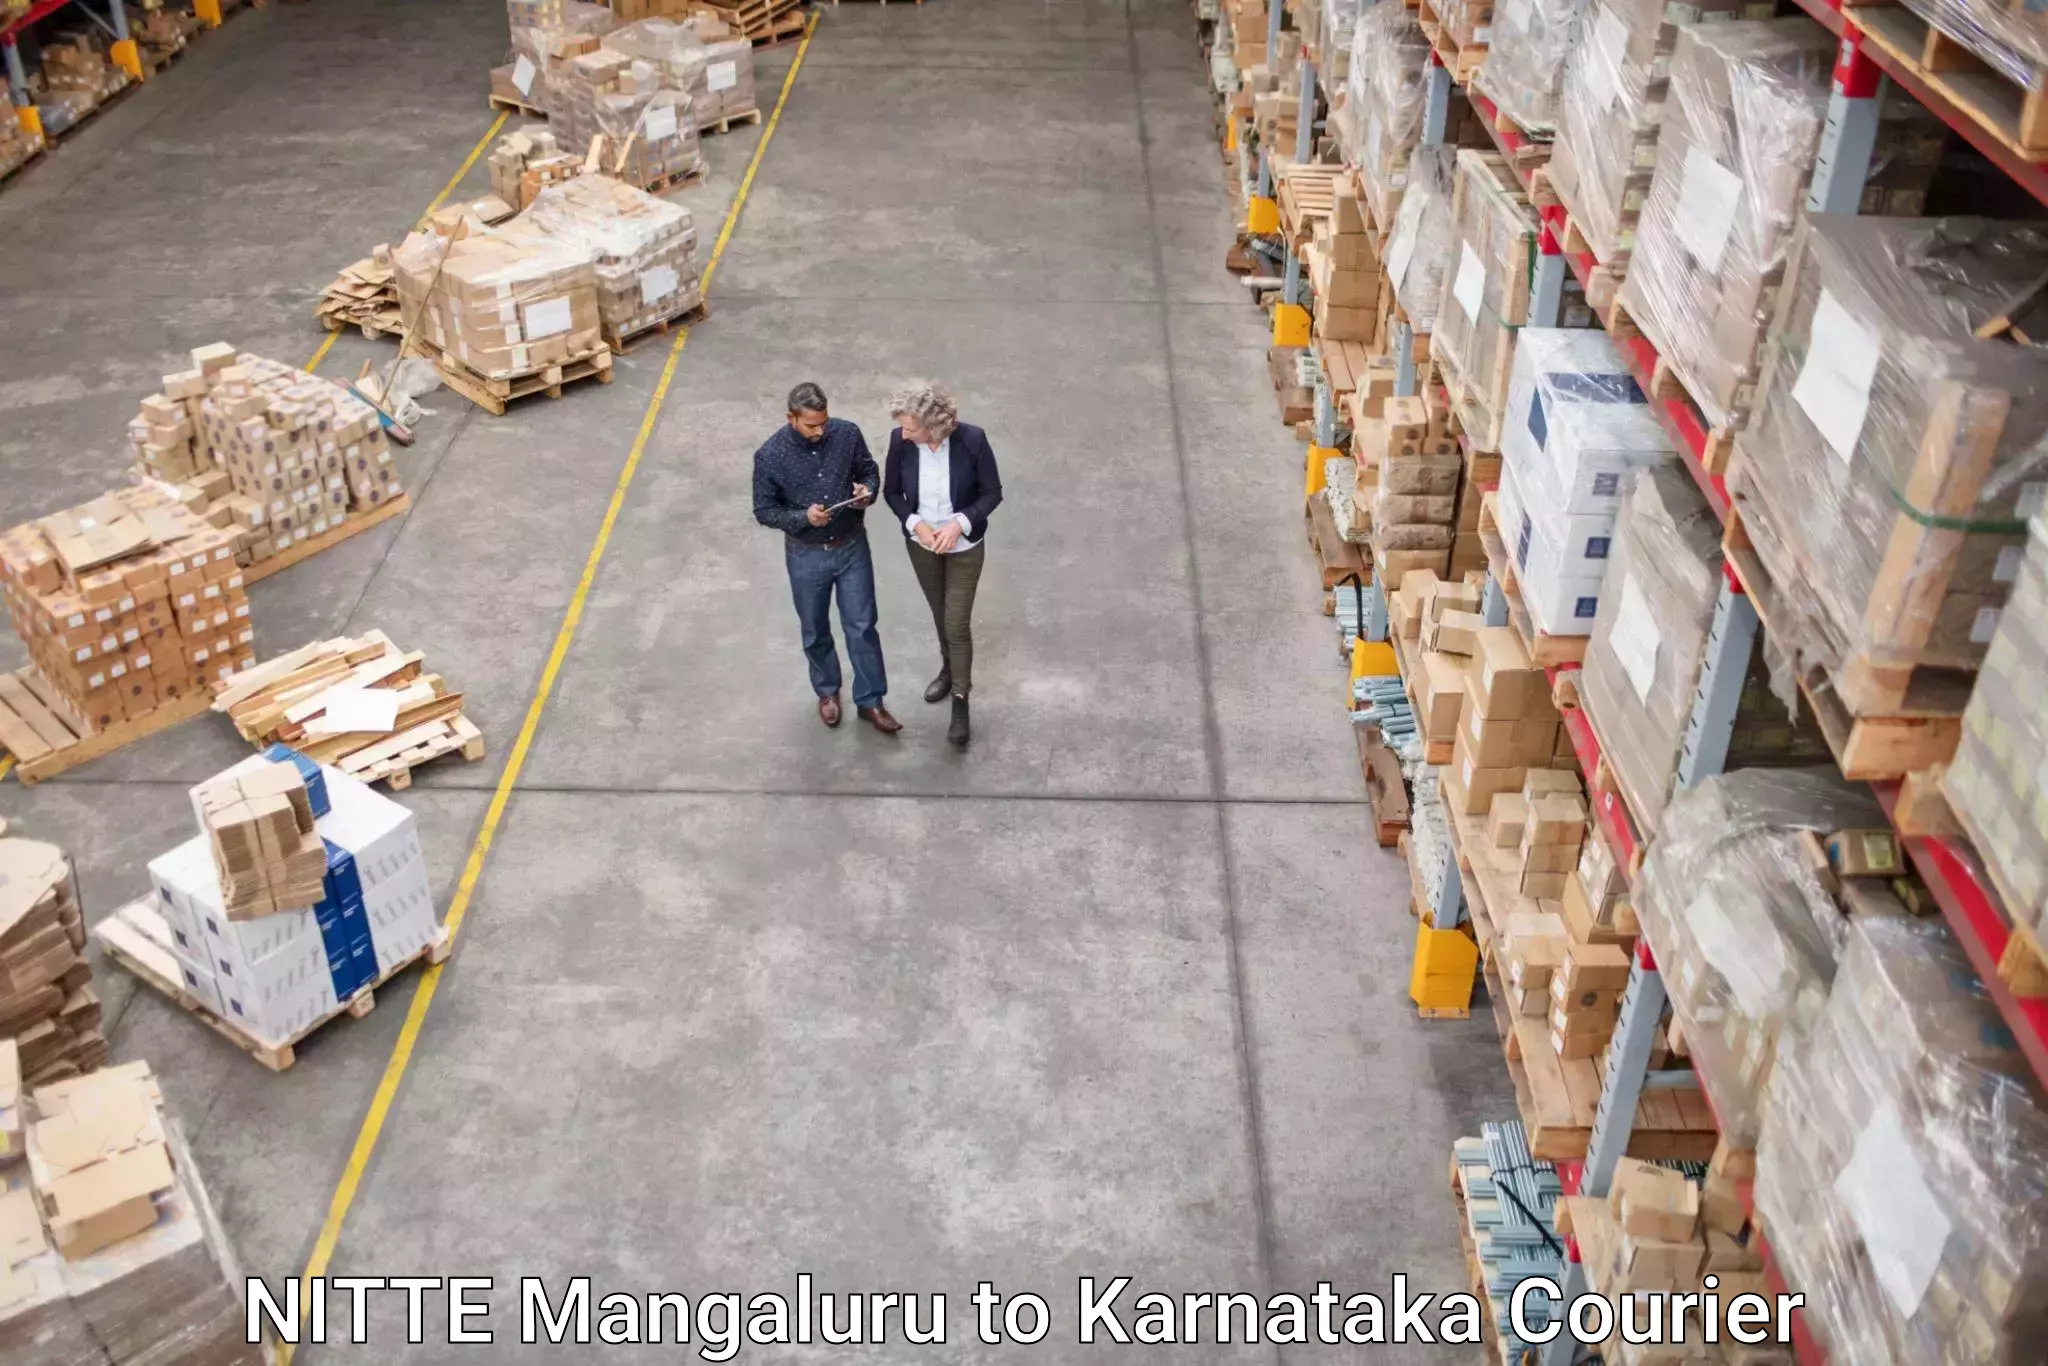 Courier service comparison NITTE Mangaluru to Channapatna